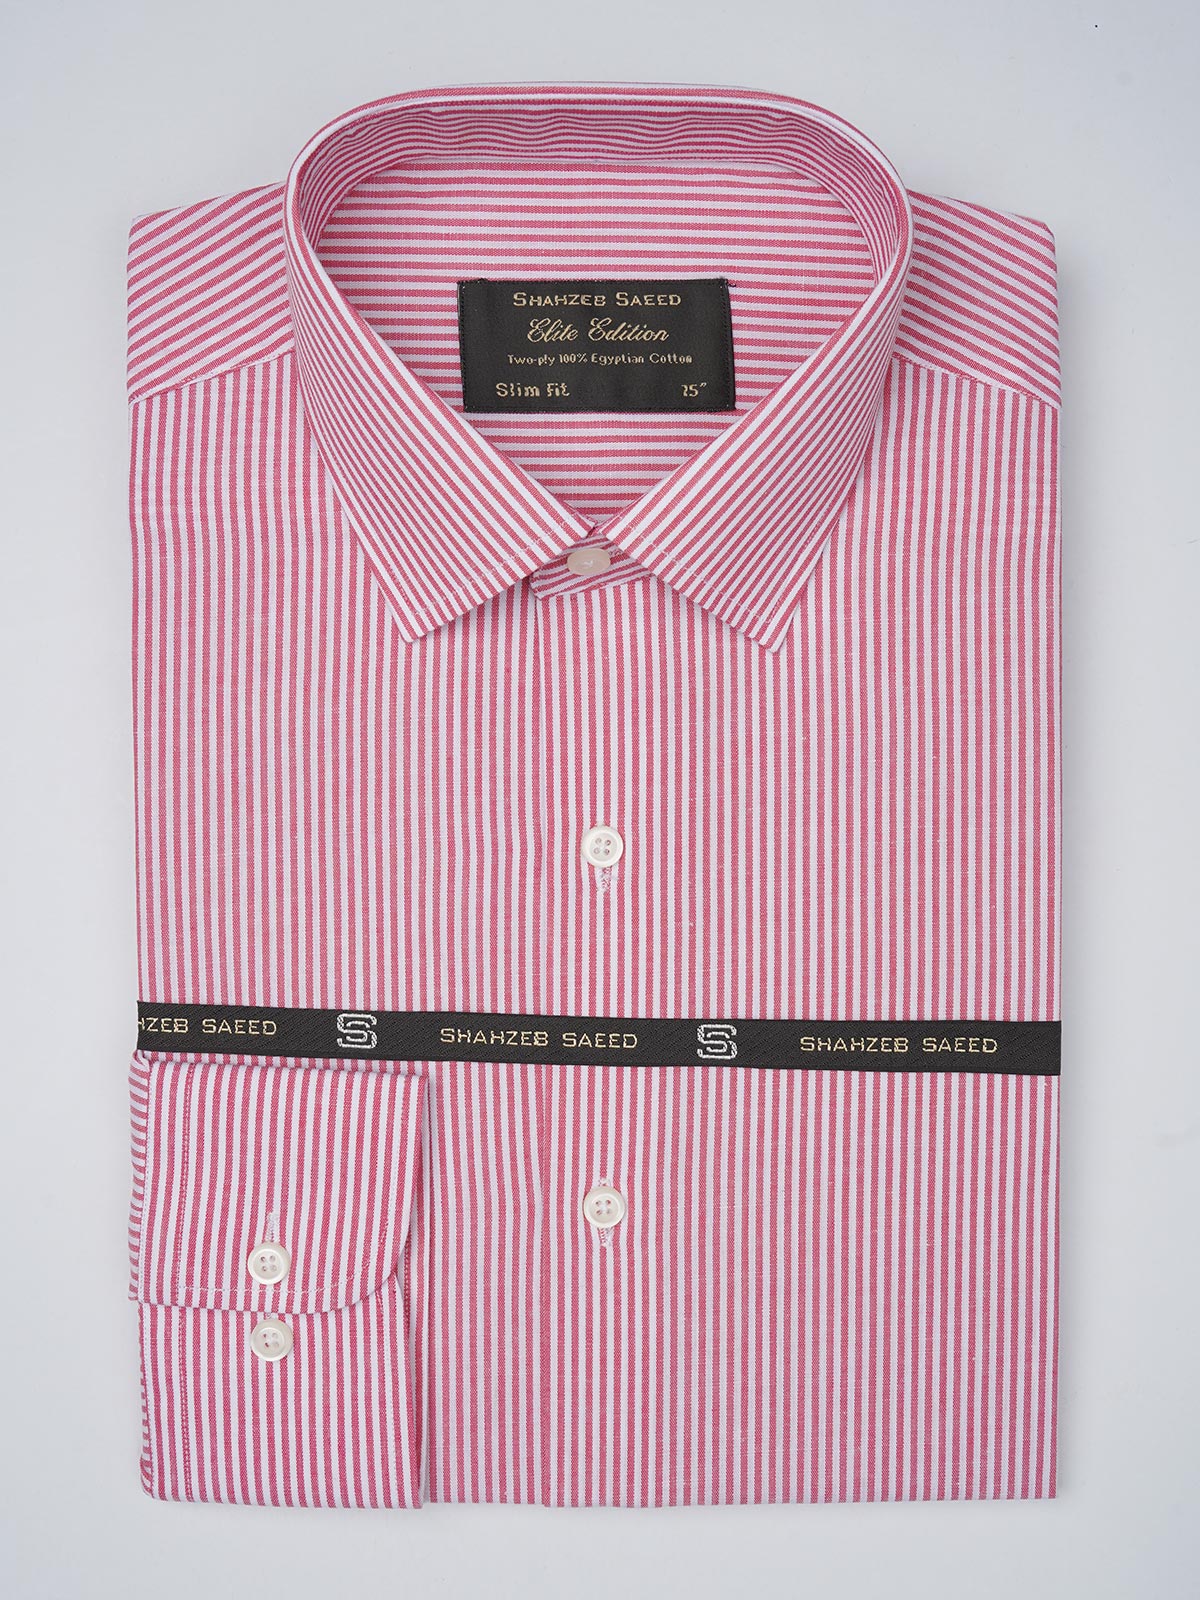 Red & White Striped, Elite Edition, French Collar Men’s Formal Shirt (FS-759)